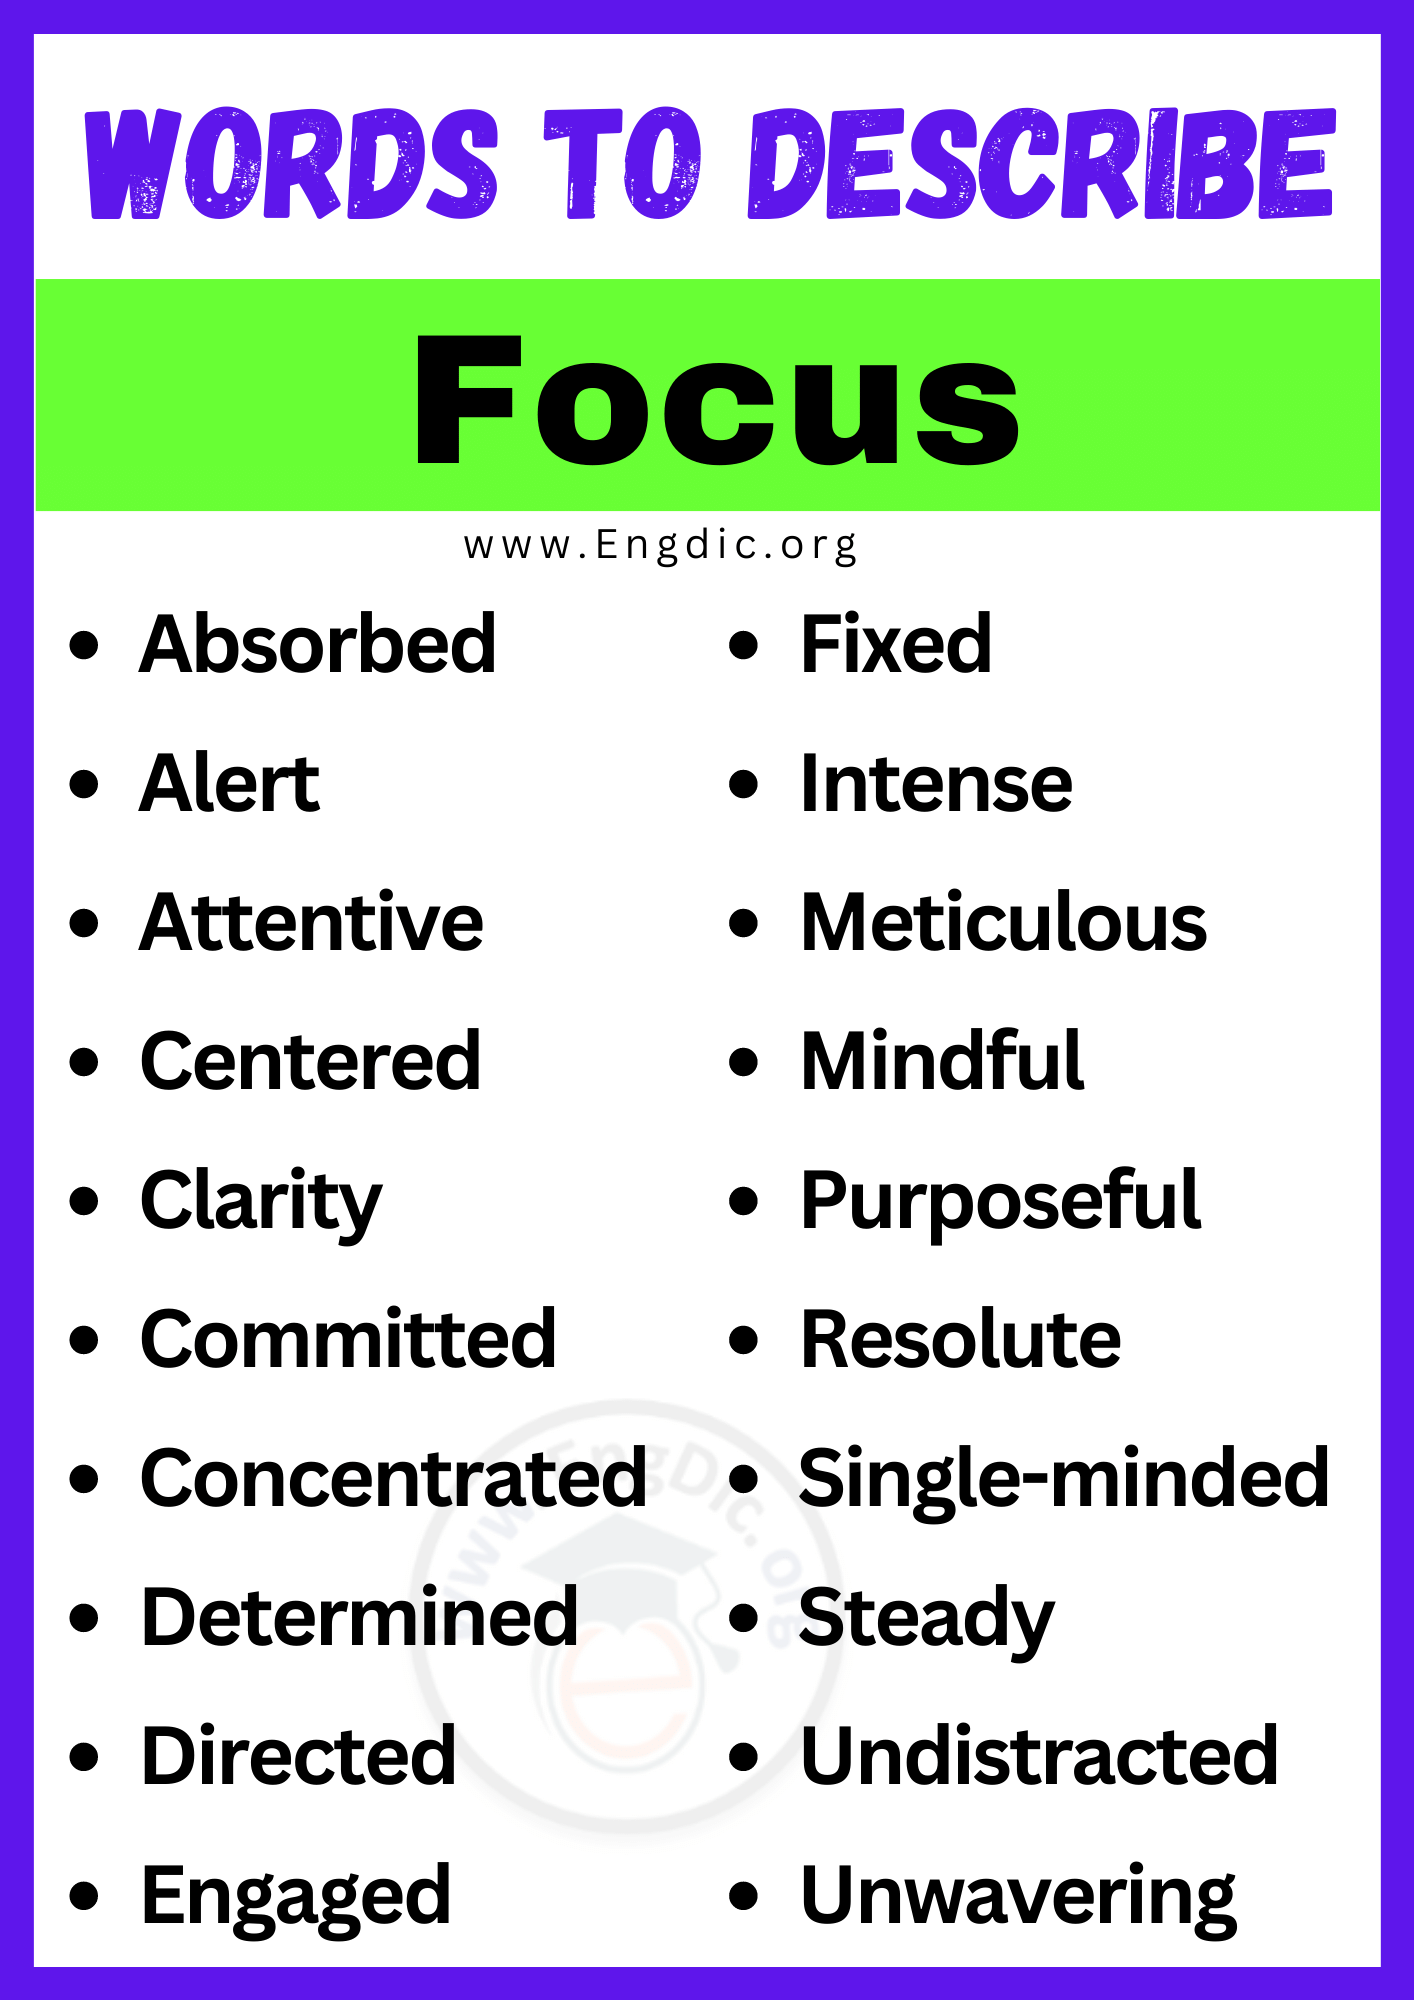 Words to Describe Focus